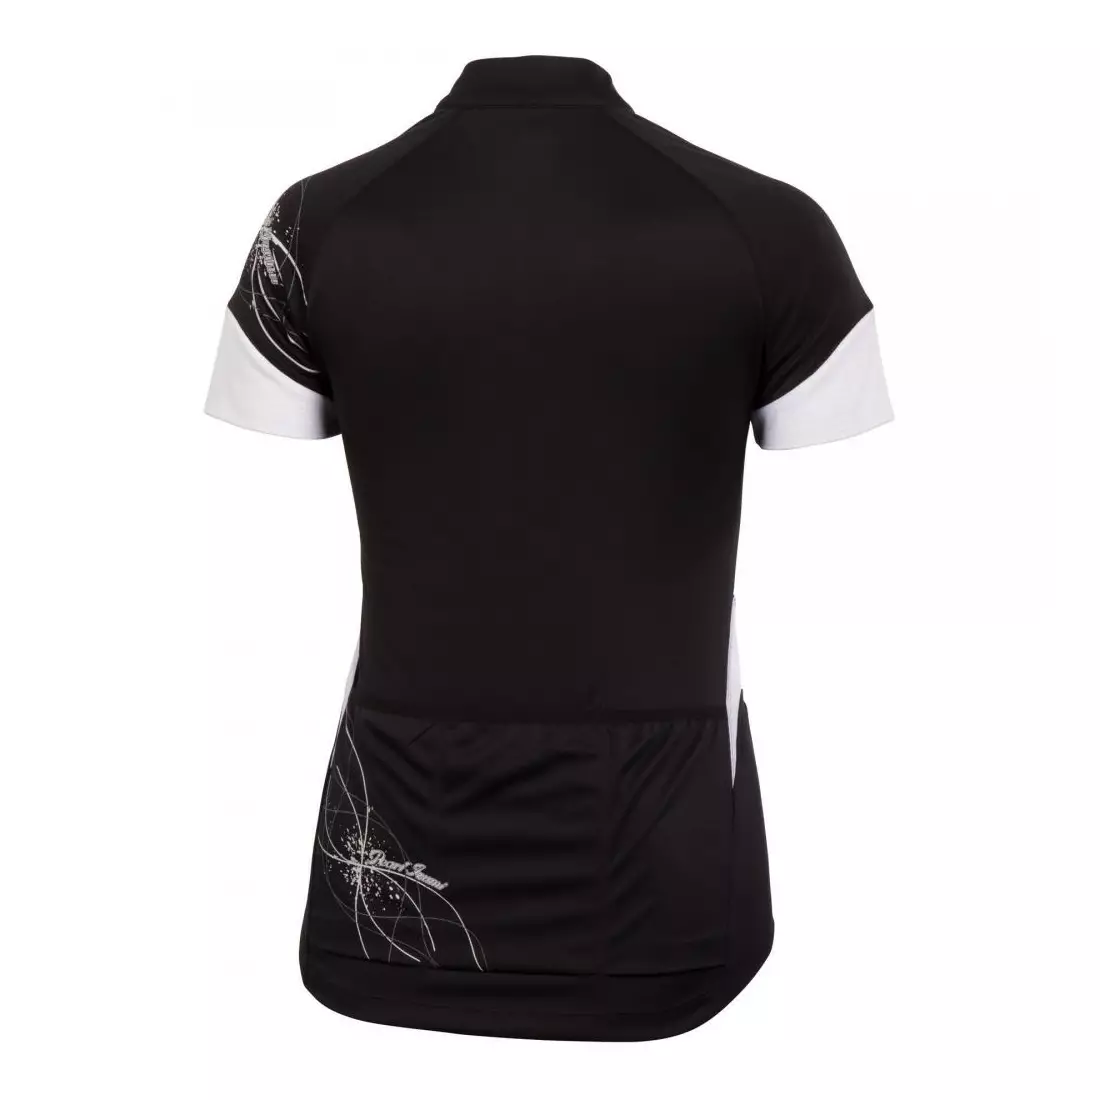 PEARL IZUMI - 11221121065 - SUGAR - women's cycling jersey